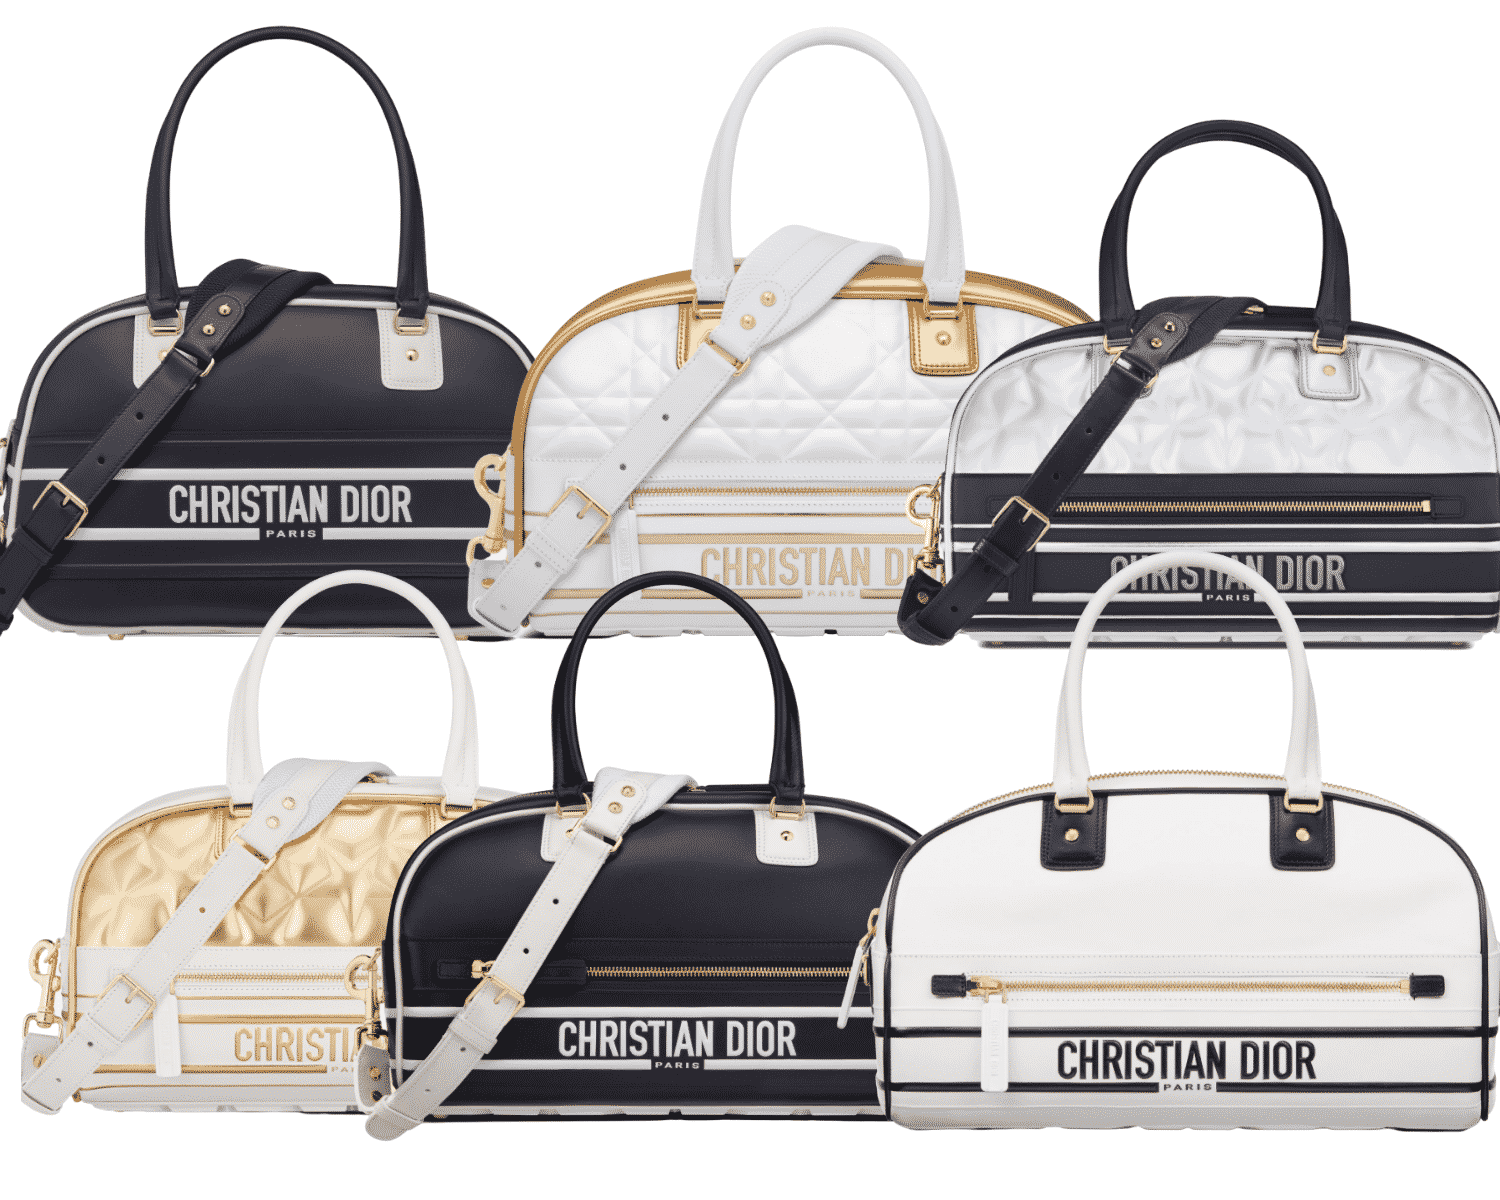 Georgina Rodriguez's Luxury Handbag Collection. The Insane Price Of Her ...